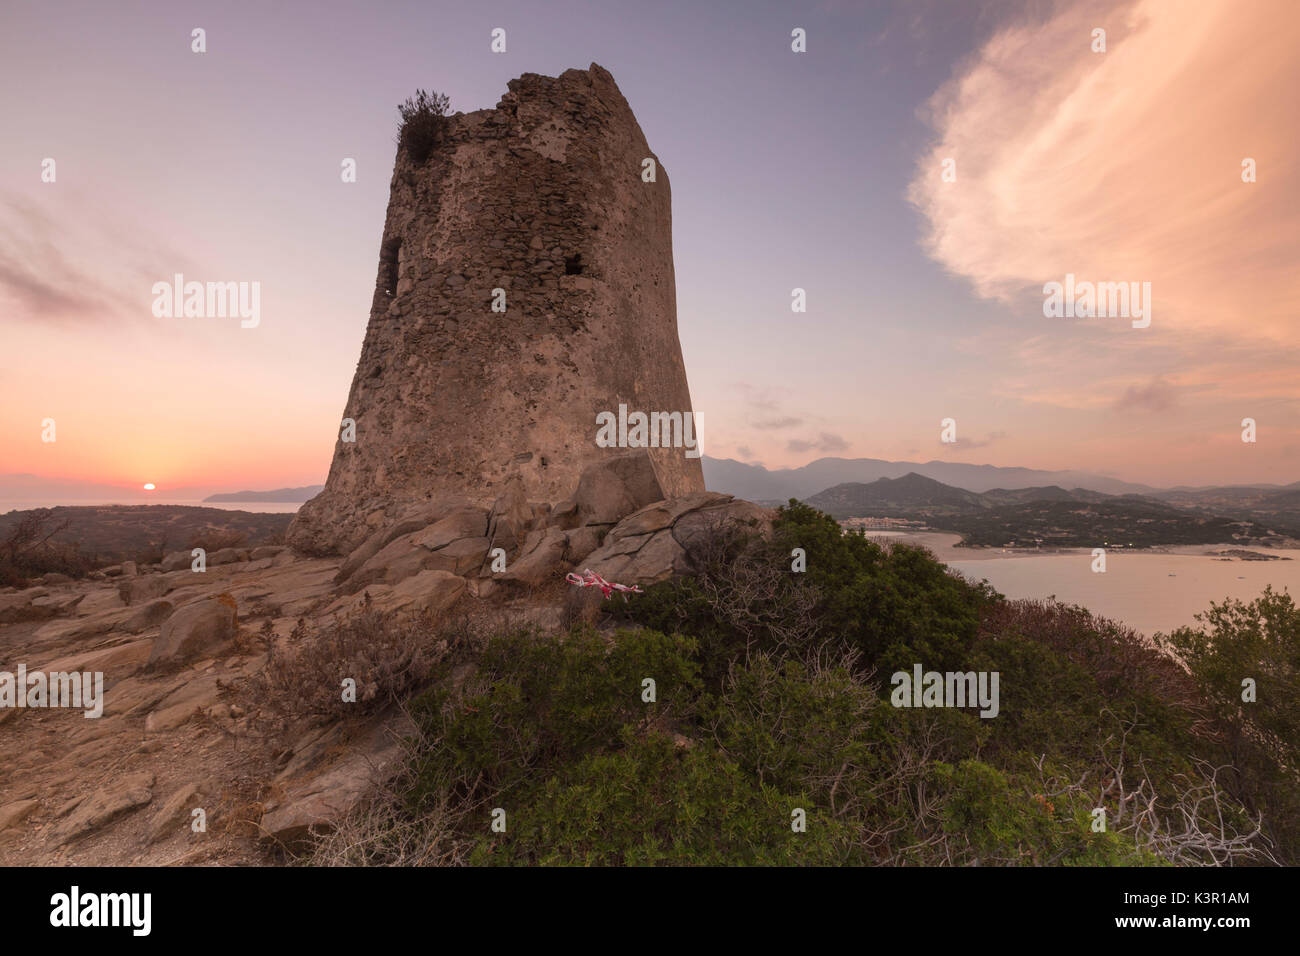 Sunset on the stone tower overlooking the bay Porto Giunco Villasimius Cagliari Sardinia Italy Europe Stock Photo